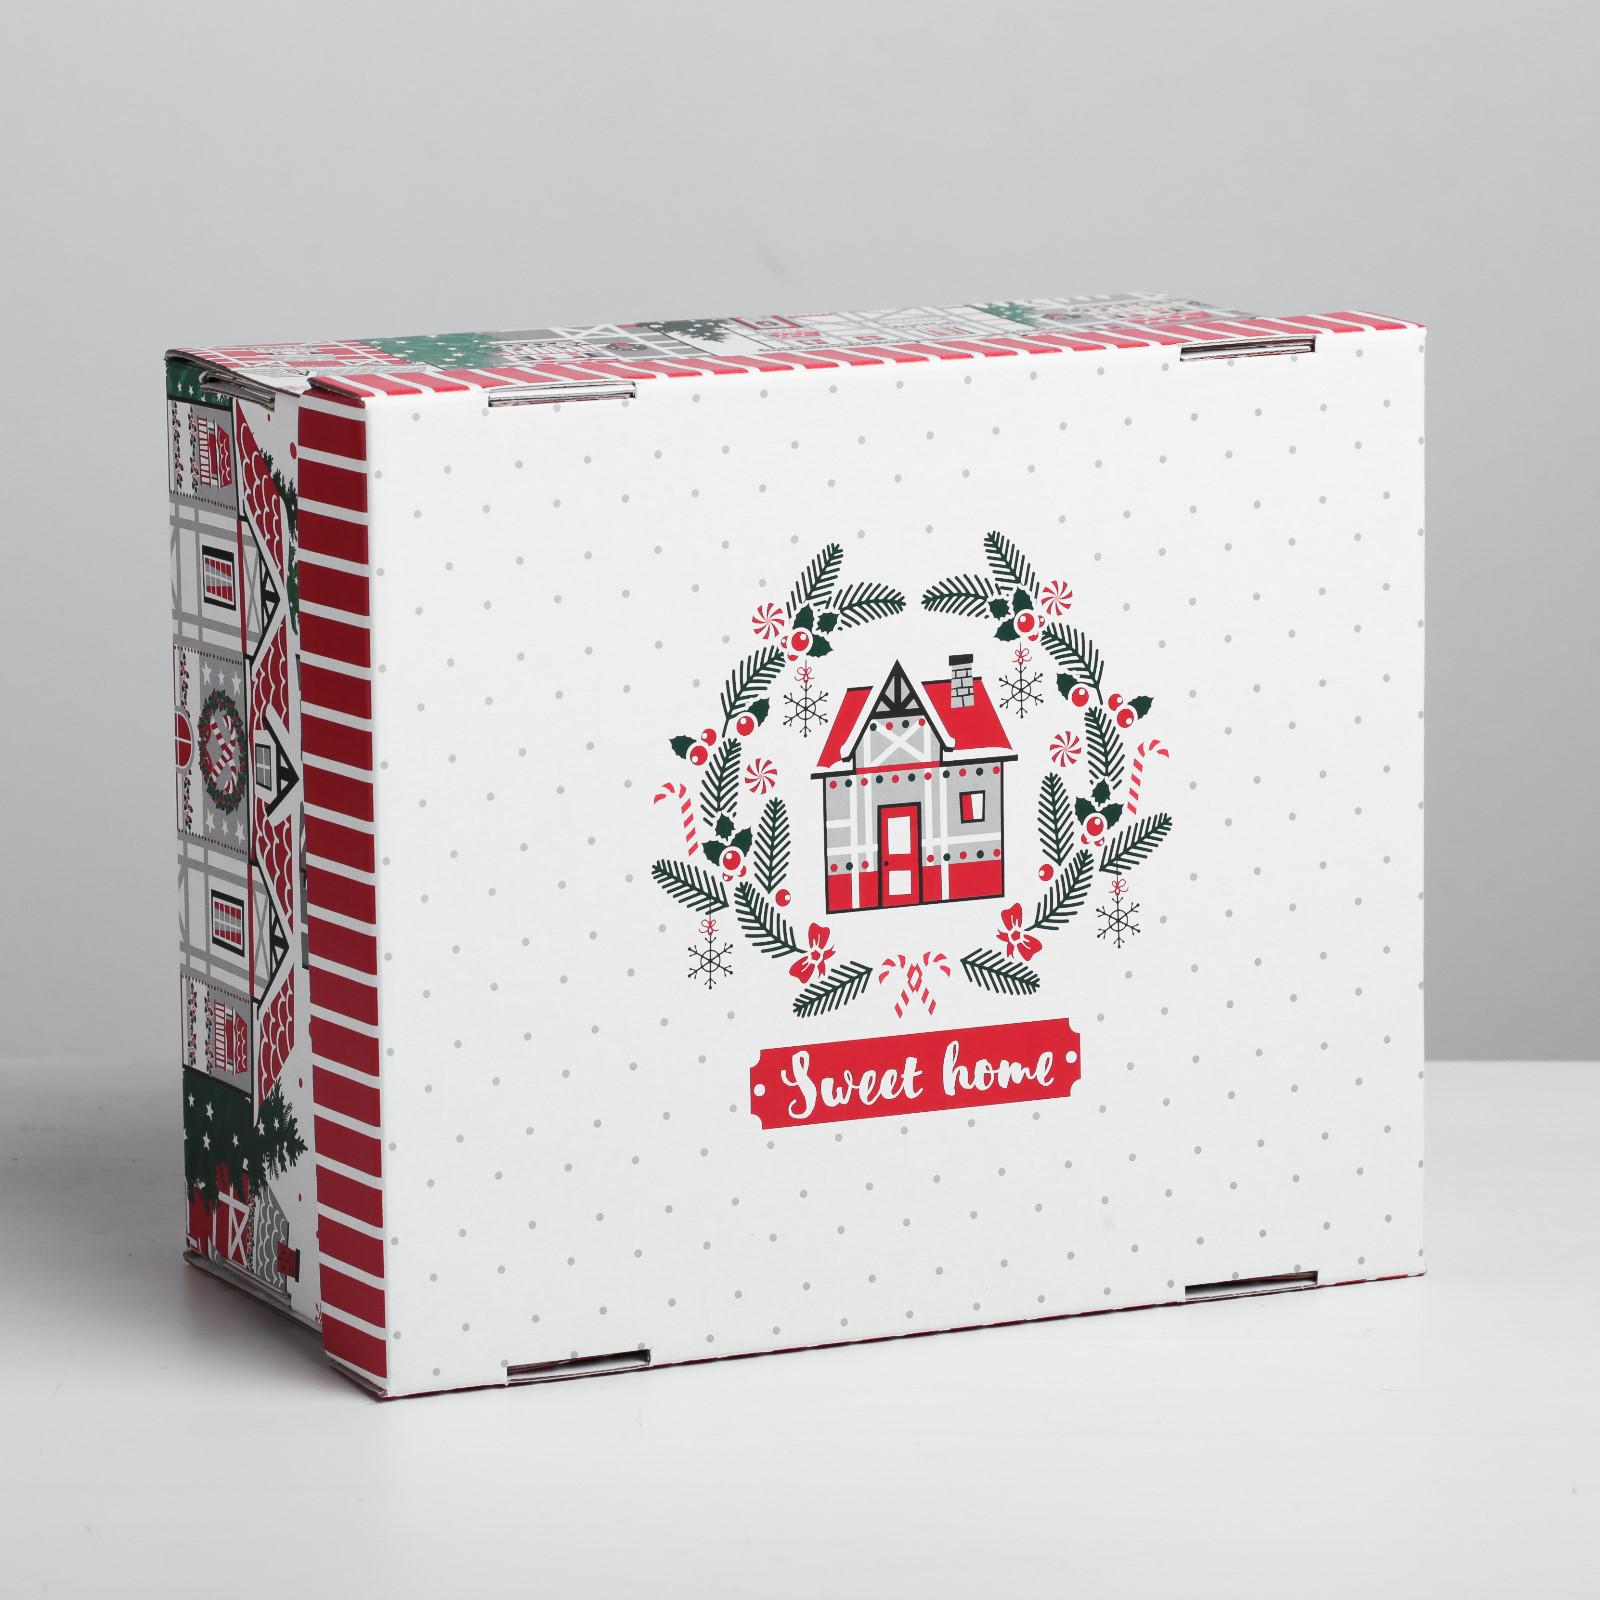 Складная коробка Дарите Счастье «Sweet home». 31.2×25.6×16.1 см - фото 2